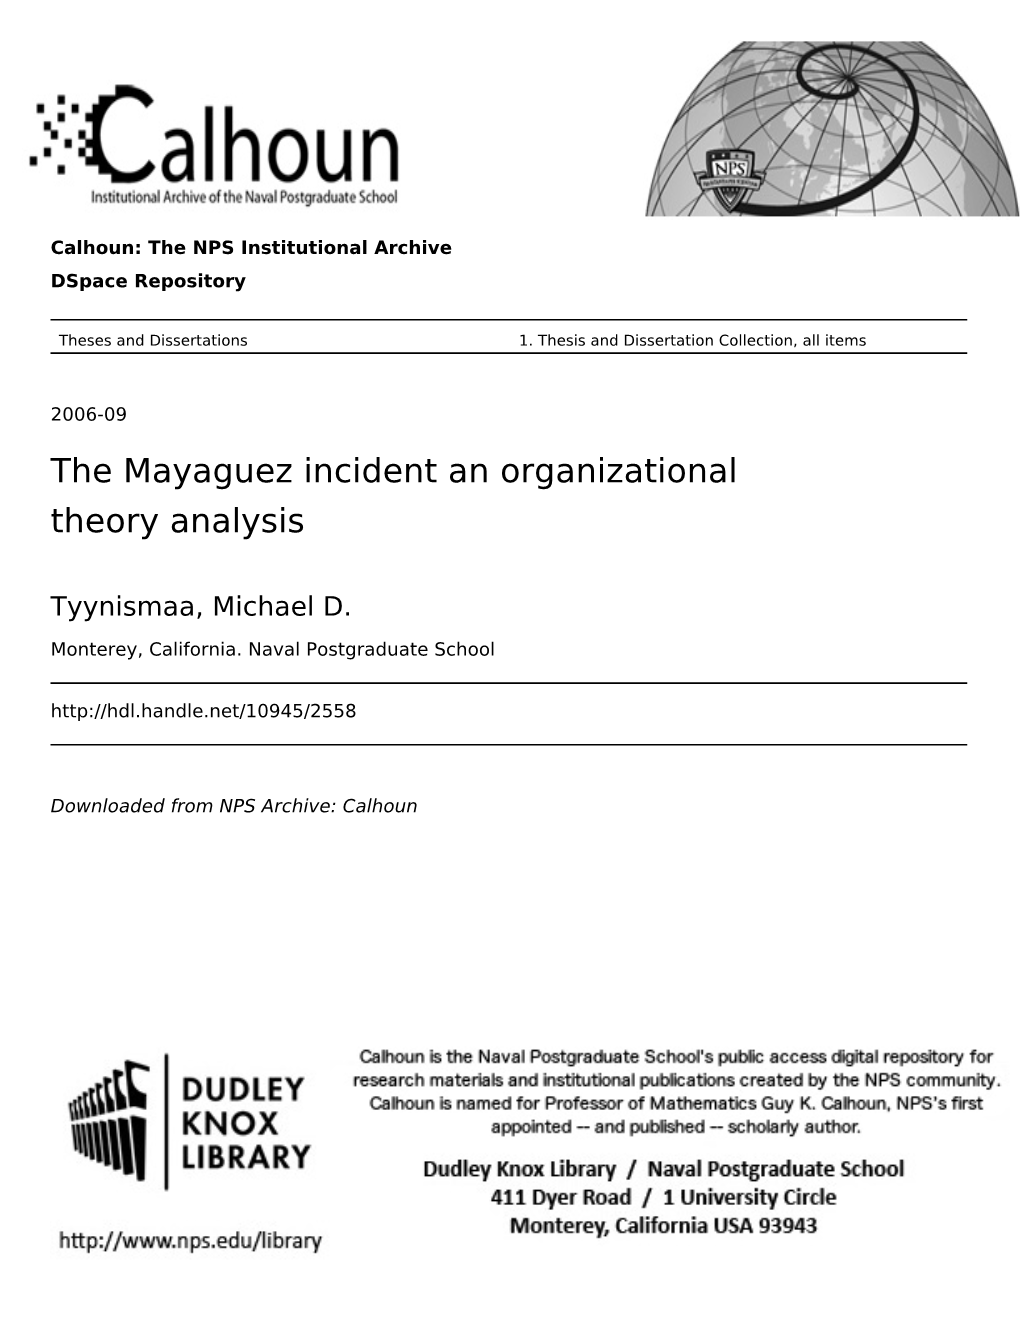 The Mayaguez Incident an Organizational Theory Analysis